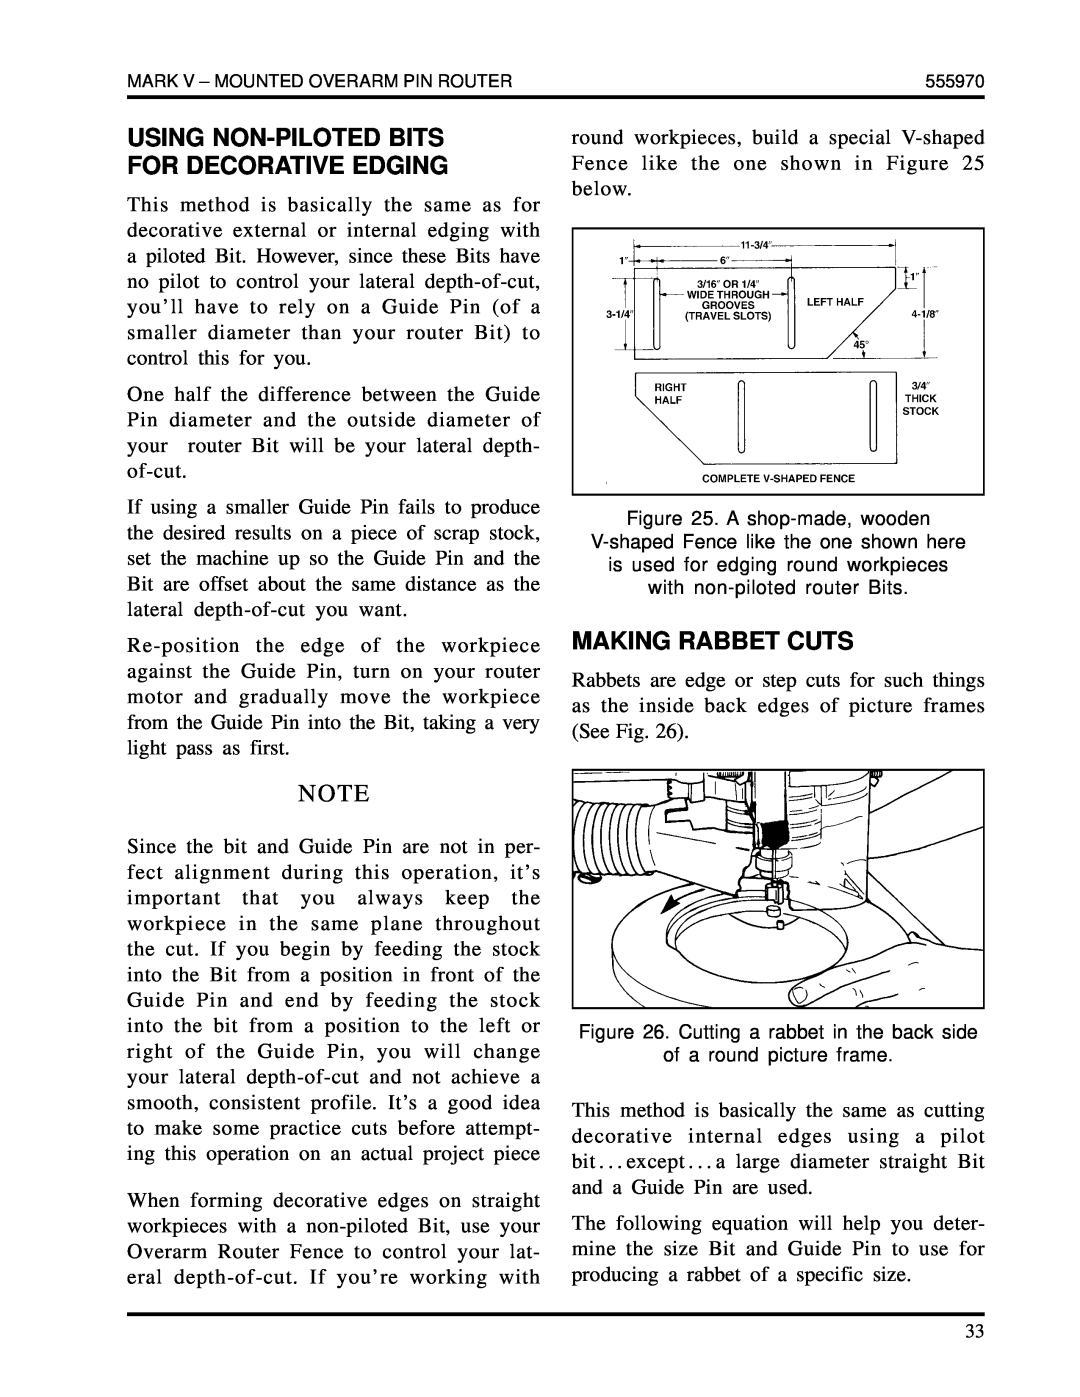 Shopsmith 555970 manual Making Rabbet Cuts, Using Non-Pilotedbits For Decorative Edging 